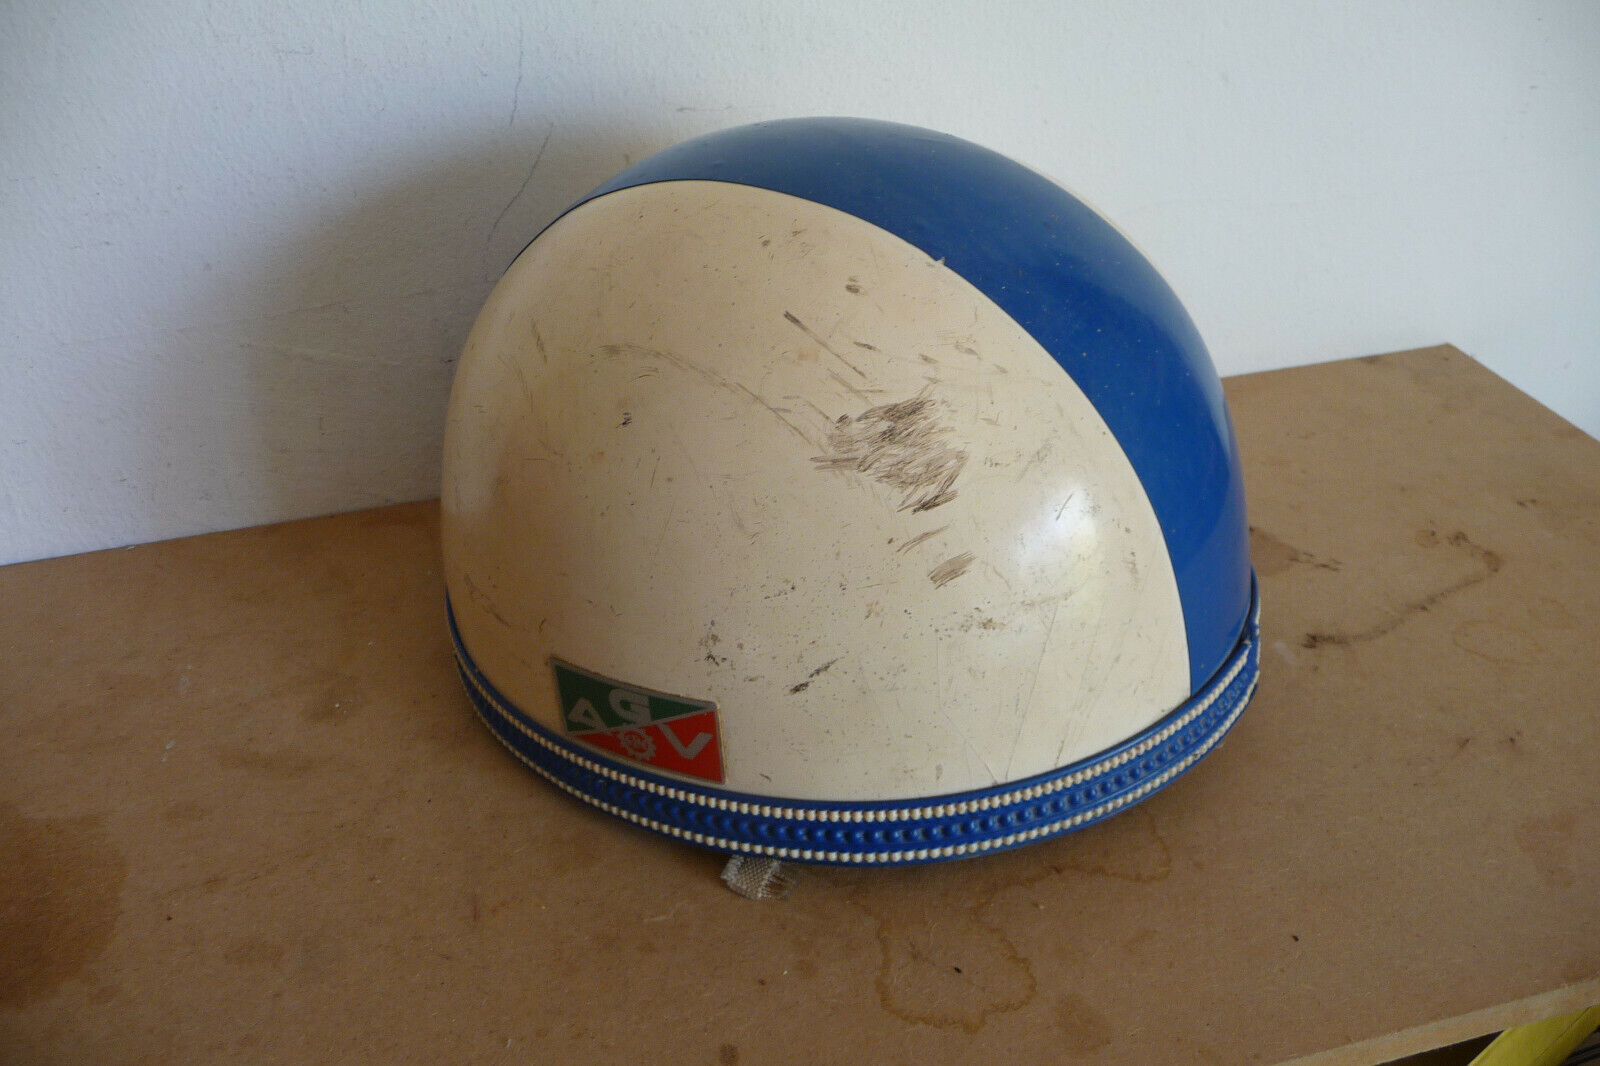 ancien casque agv 1960 + old helmet agv 1960